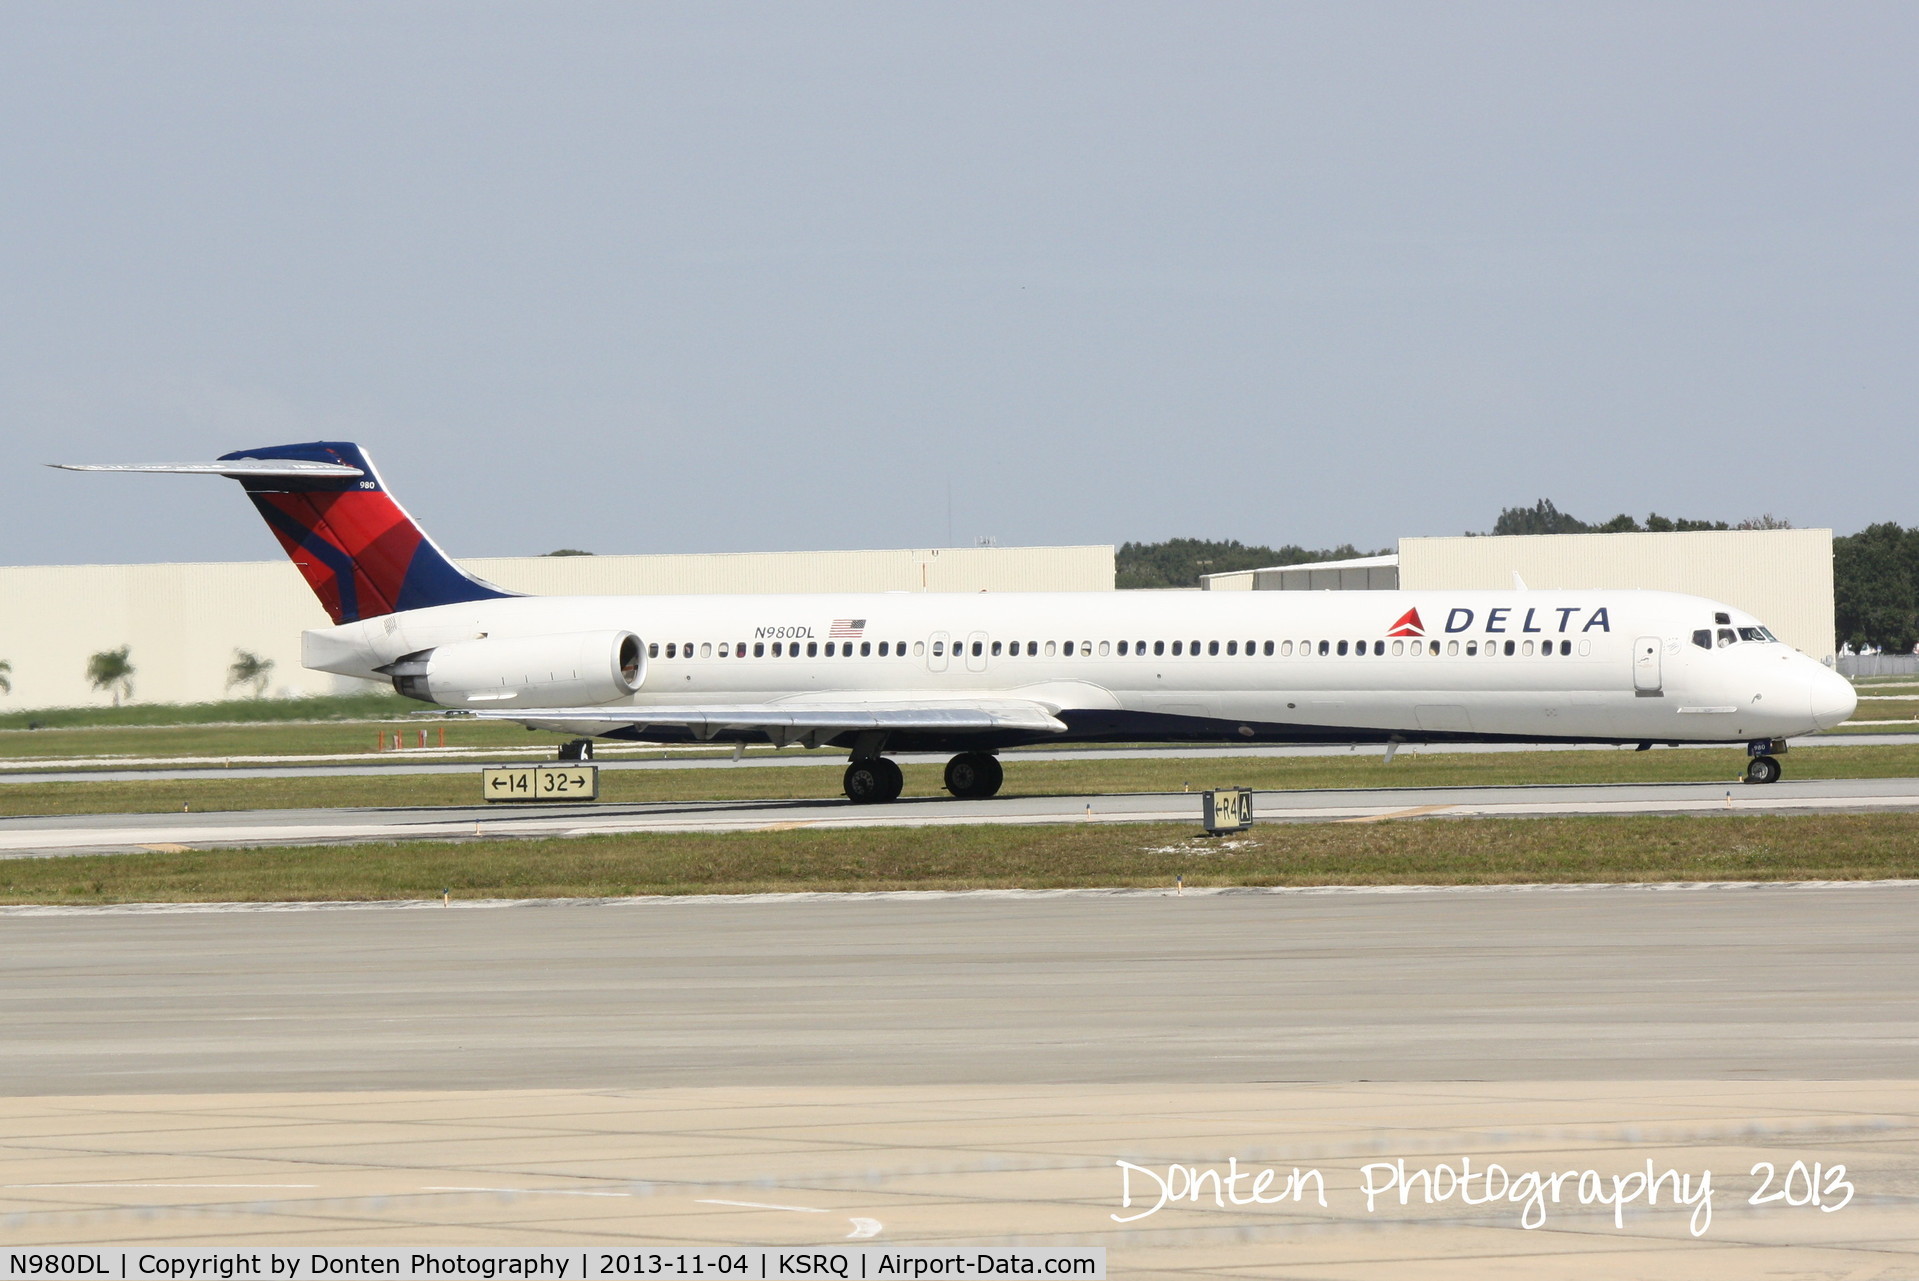 N980DL, 1991 McDonnell Douglas MD-88 C/N 53267, Delta Flight 2298 (N980DL) departs Sarasota-Bradenton International Airport enroute to Hartsfield-Jackson Atlanta International Airport